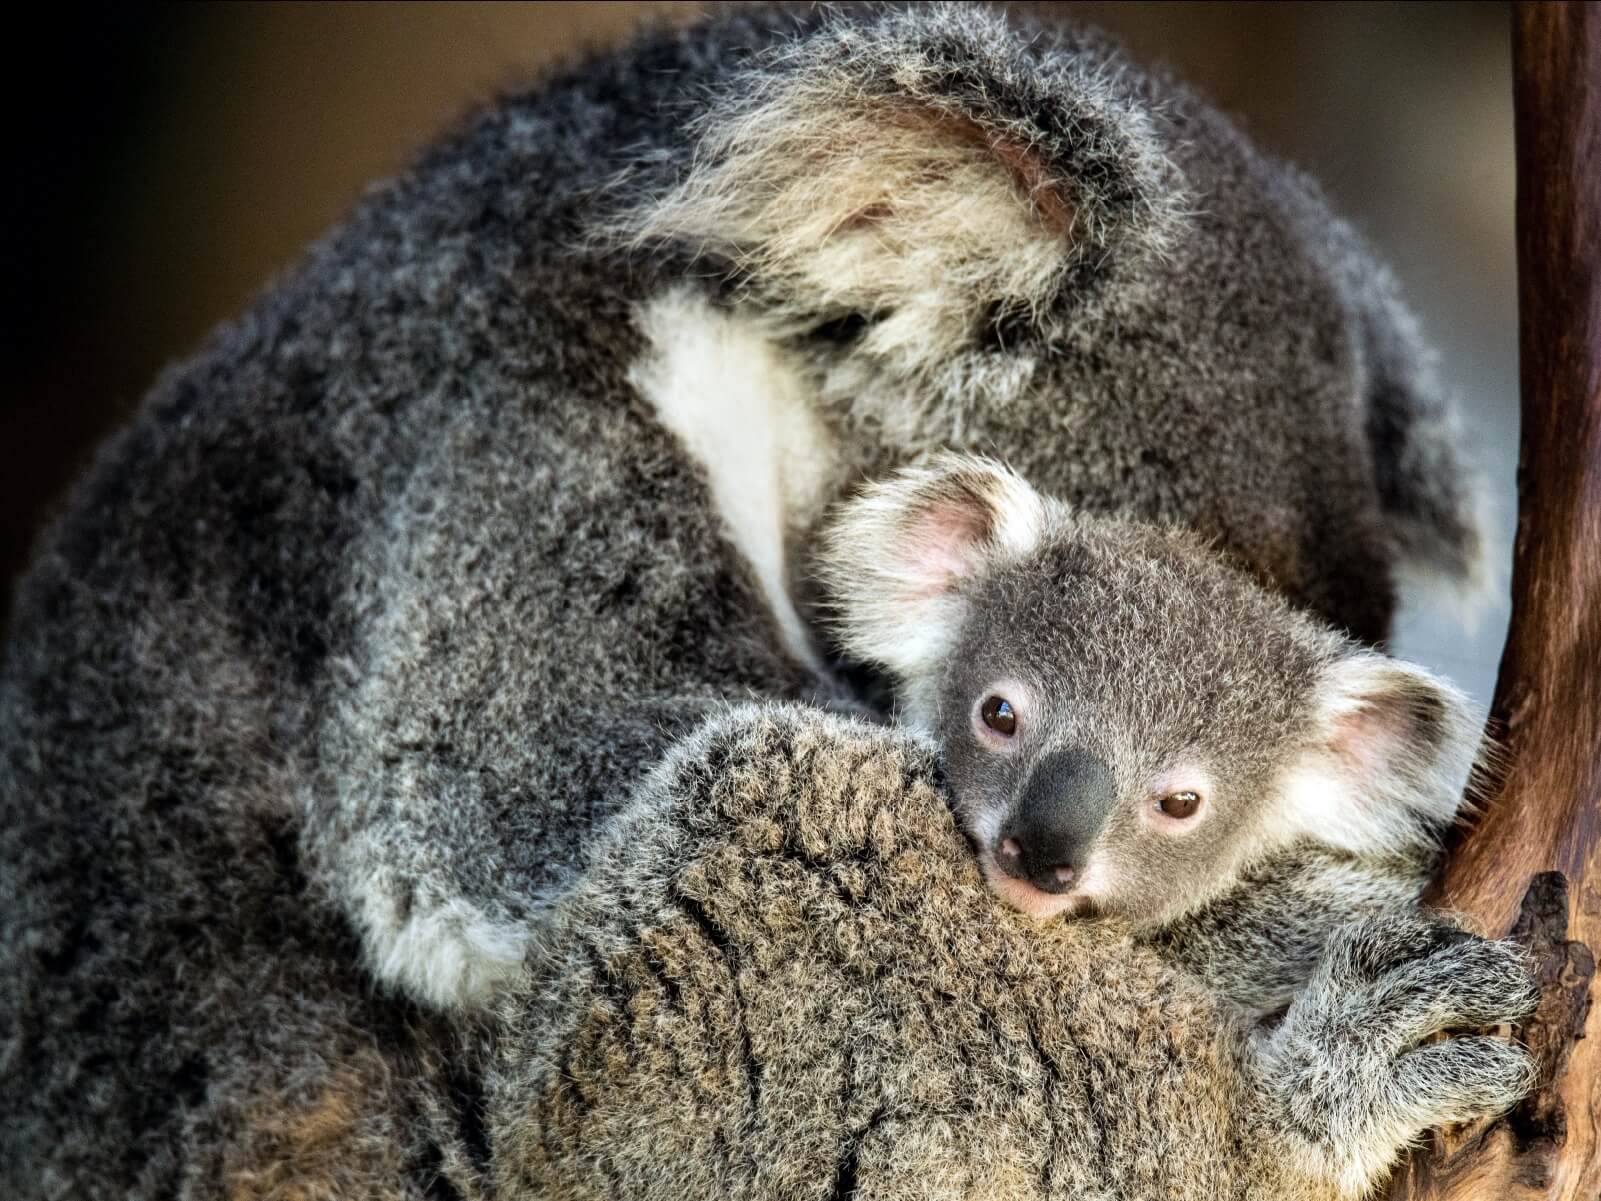 Best of Wildlife Tour Koala and baby